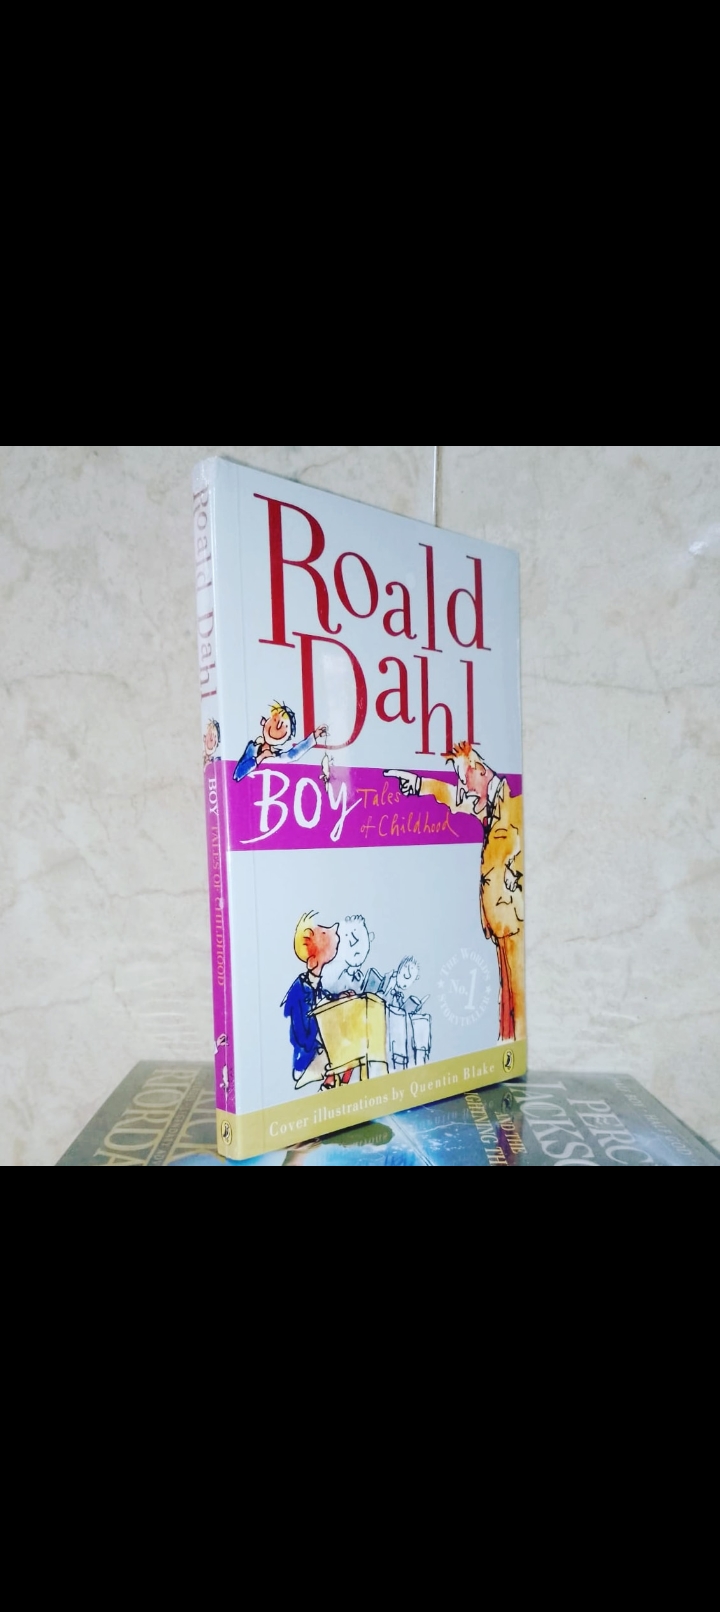 boy tales of childhood by roald dahl. new paperback